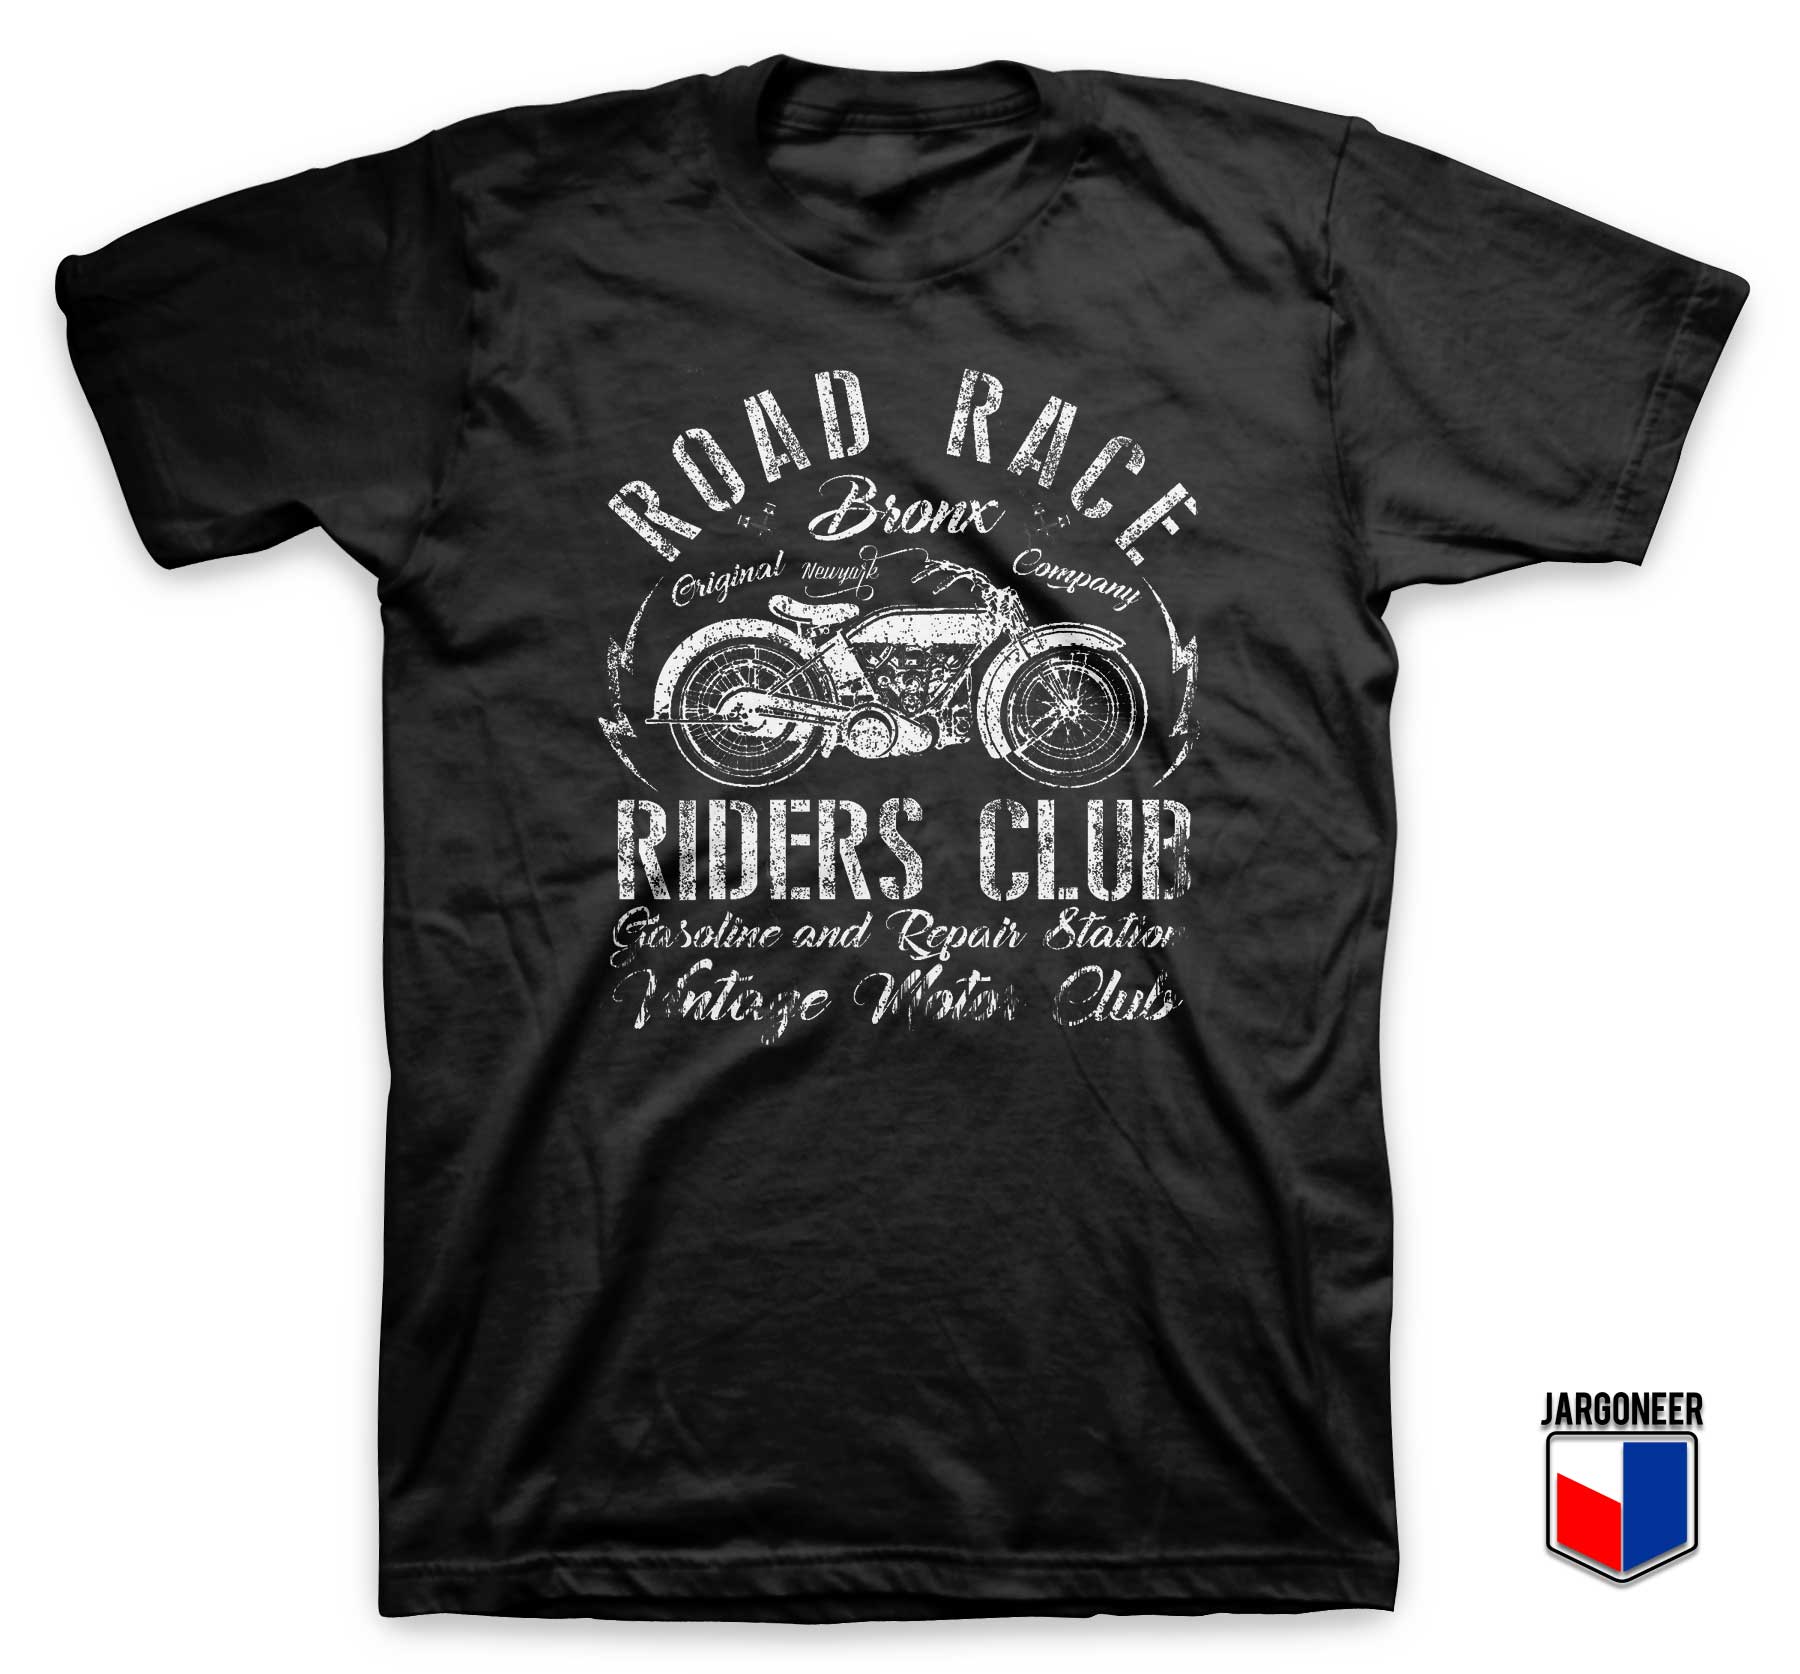 Road Race Bronx Rider Club T Shirt - Shop Unique Graphic Cool Shirt Designs